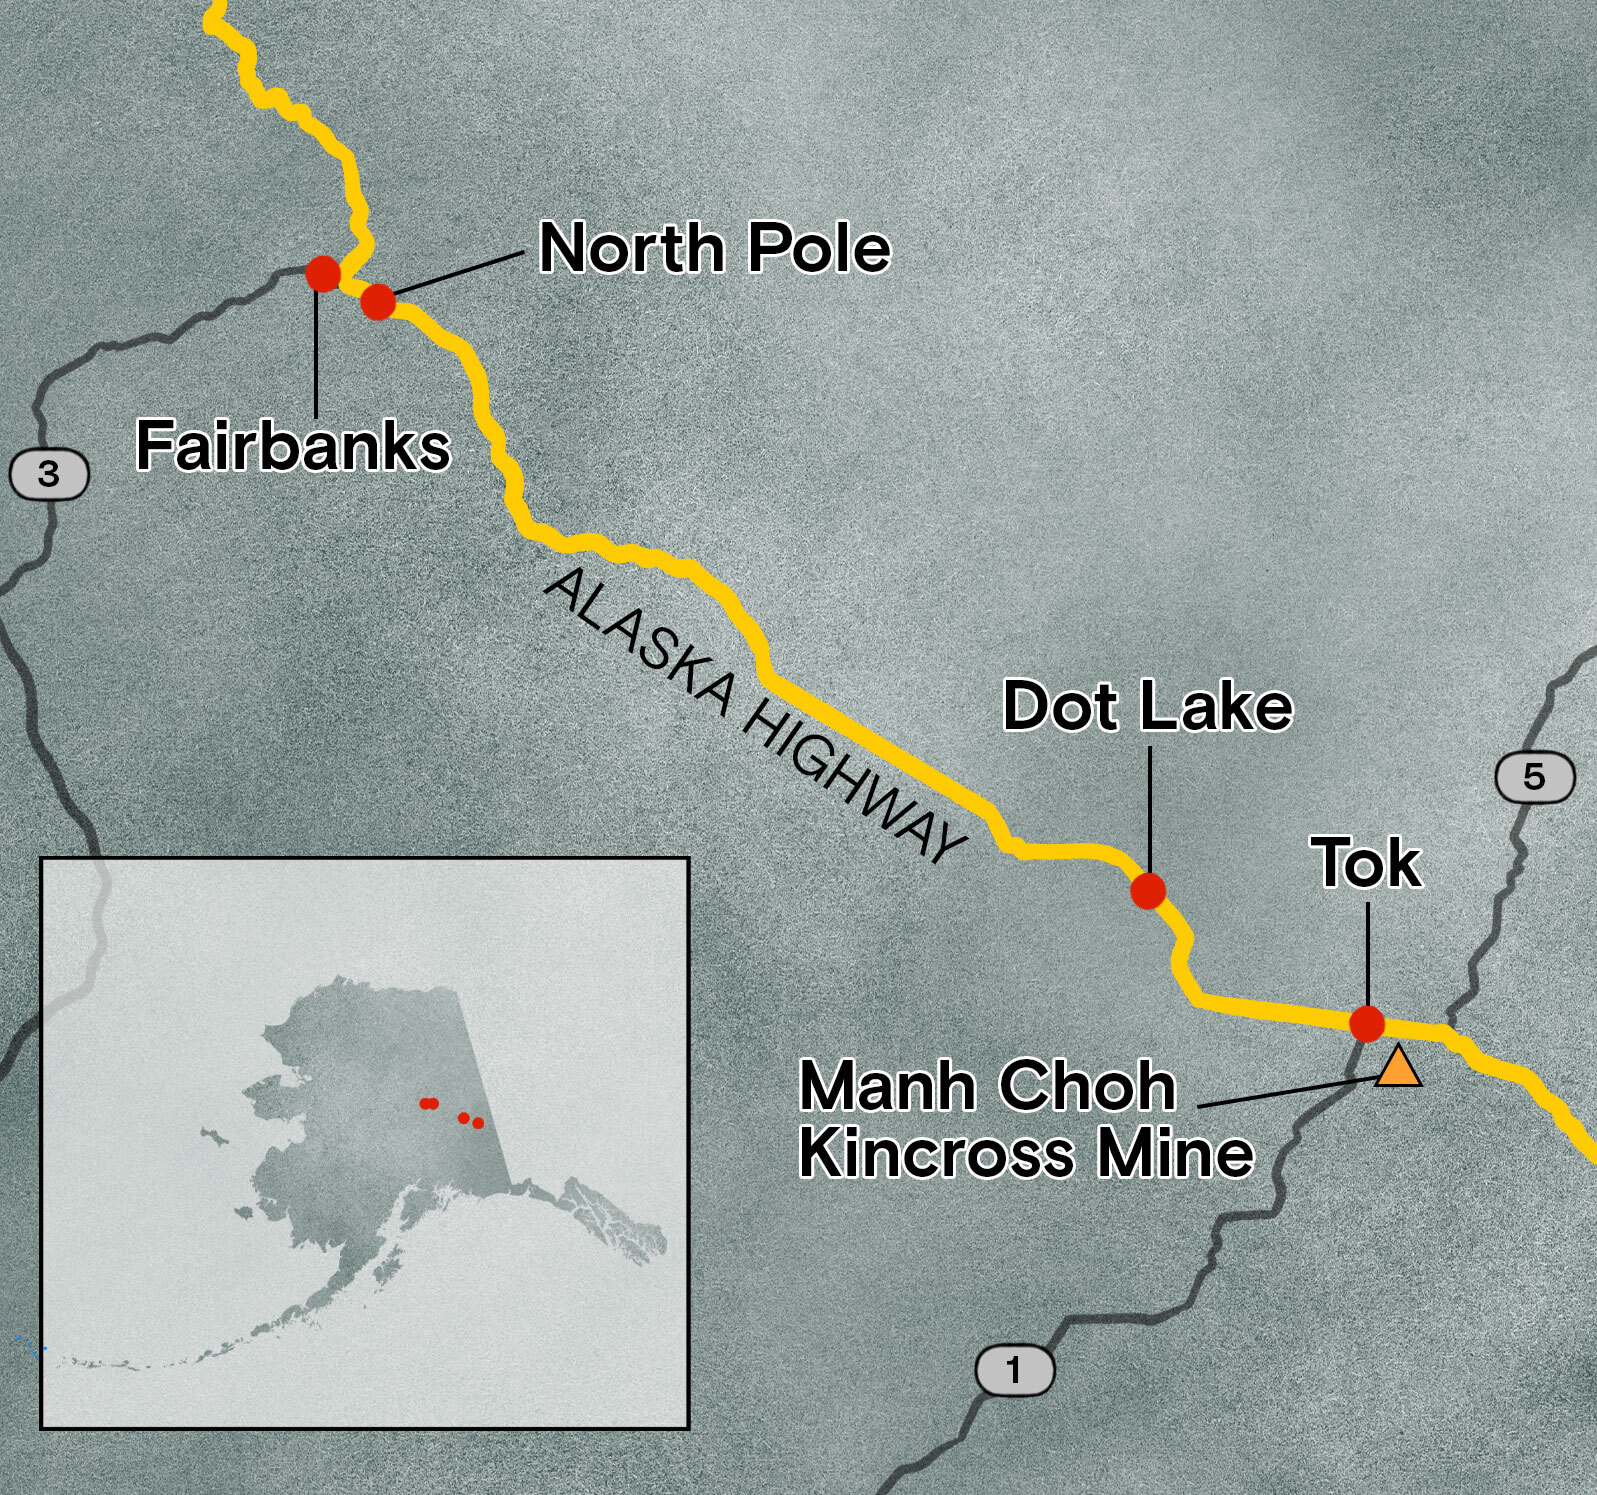 a map of the Alaska Highway showing Fairbanks, North Pole, Dot Lake, Tok and Mahn Choh Kincross Mine